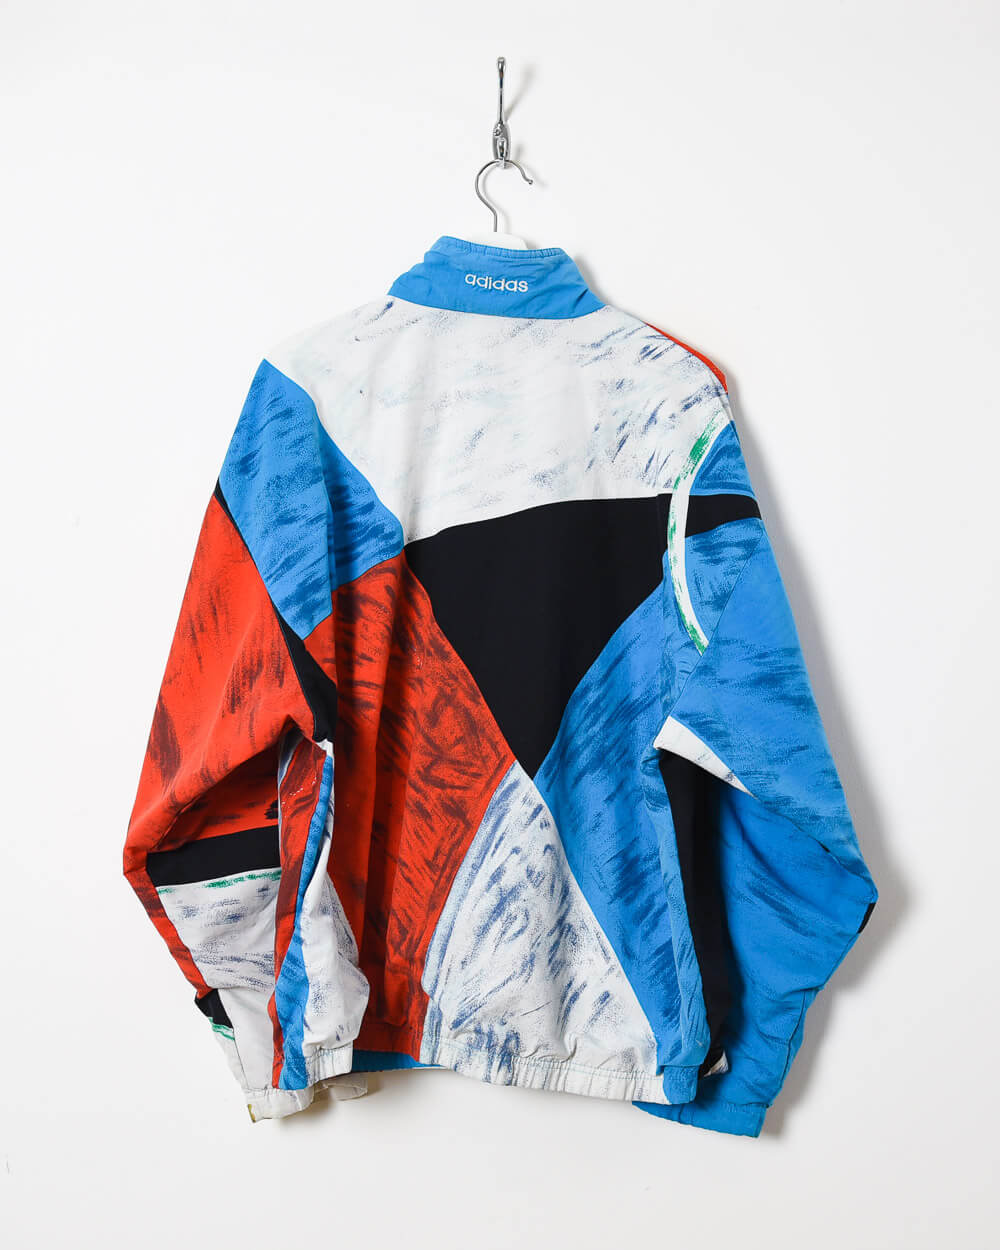 Blue Adidas Windbreaker Jacket - Large